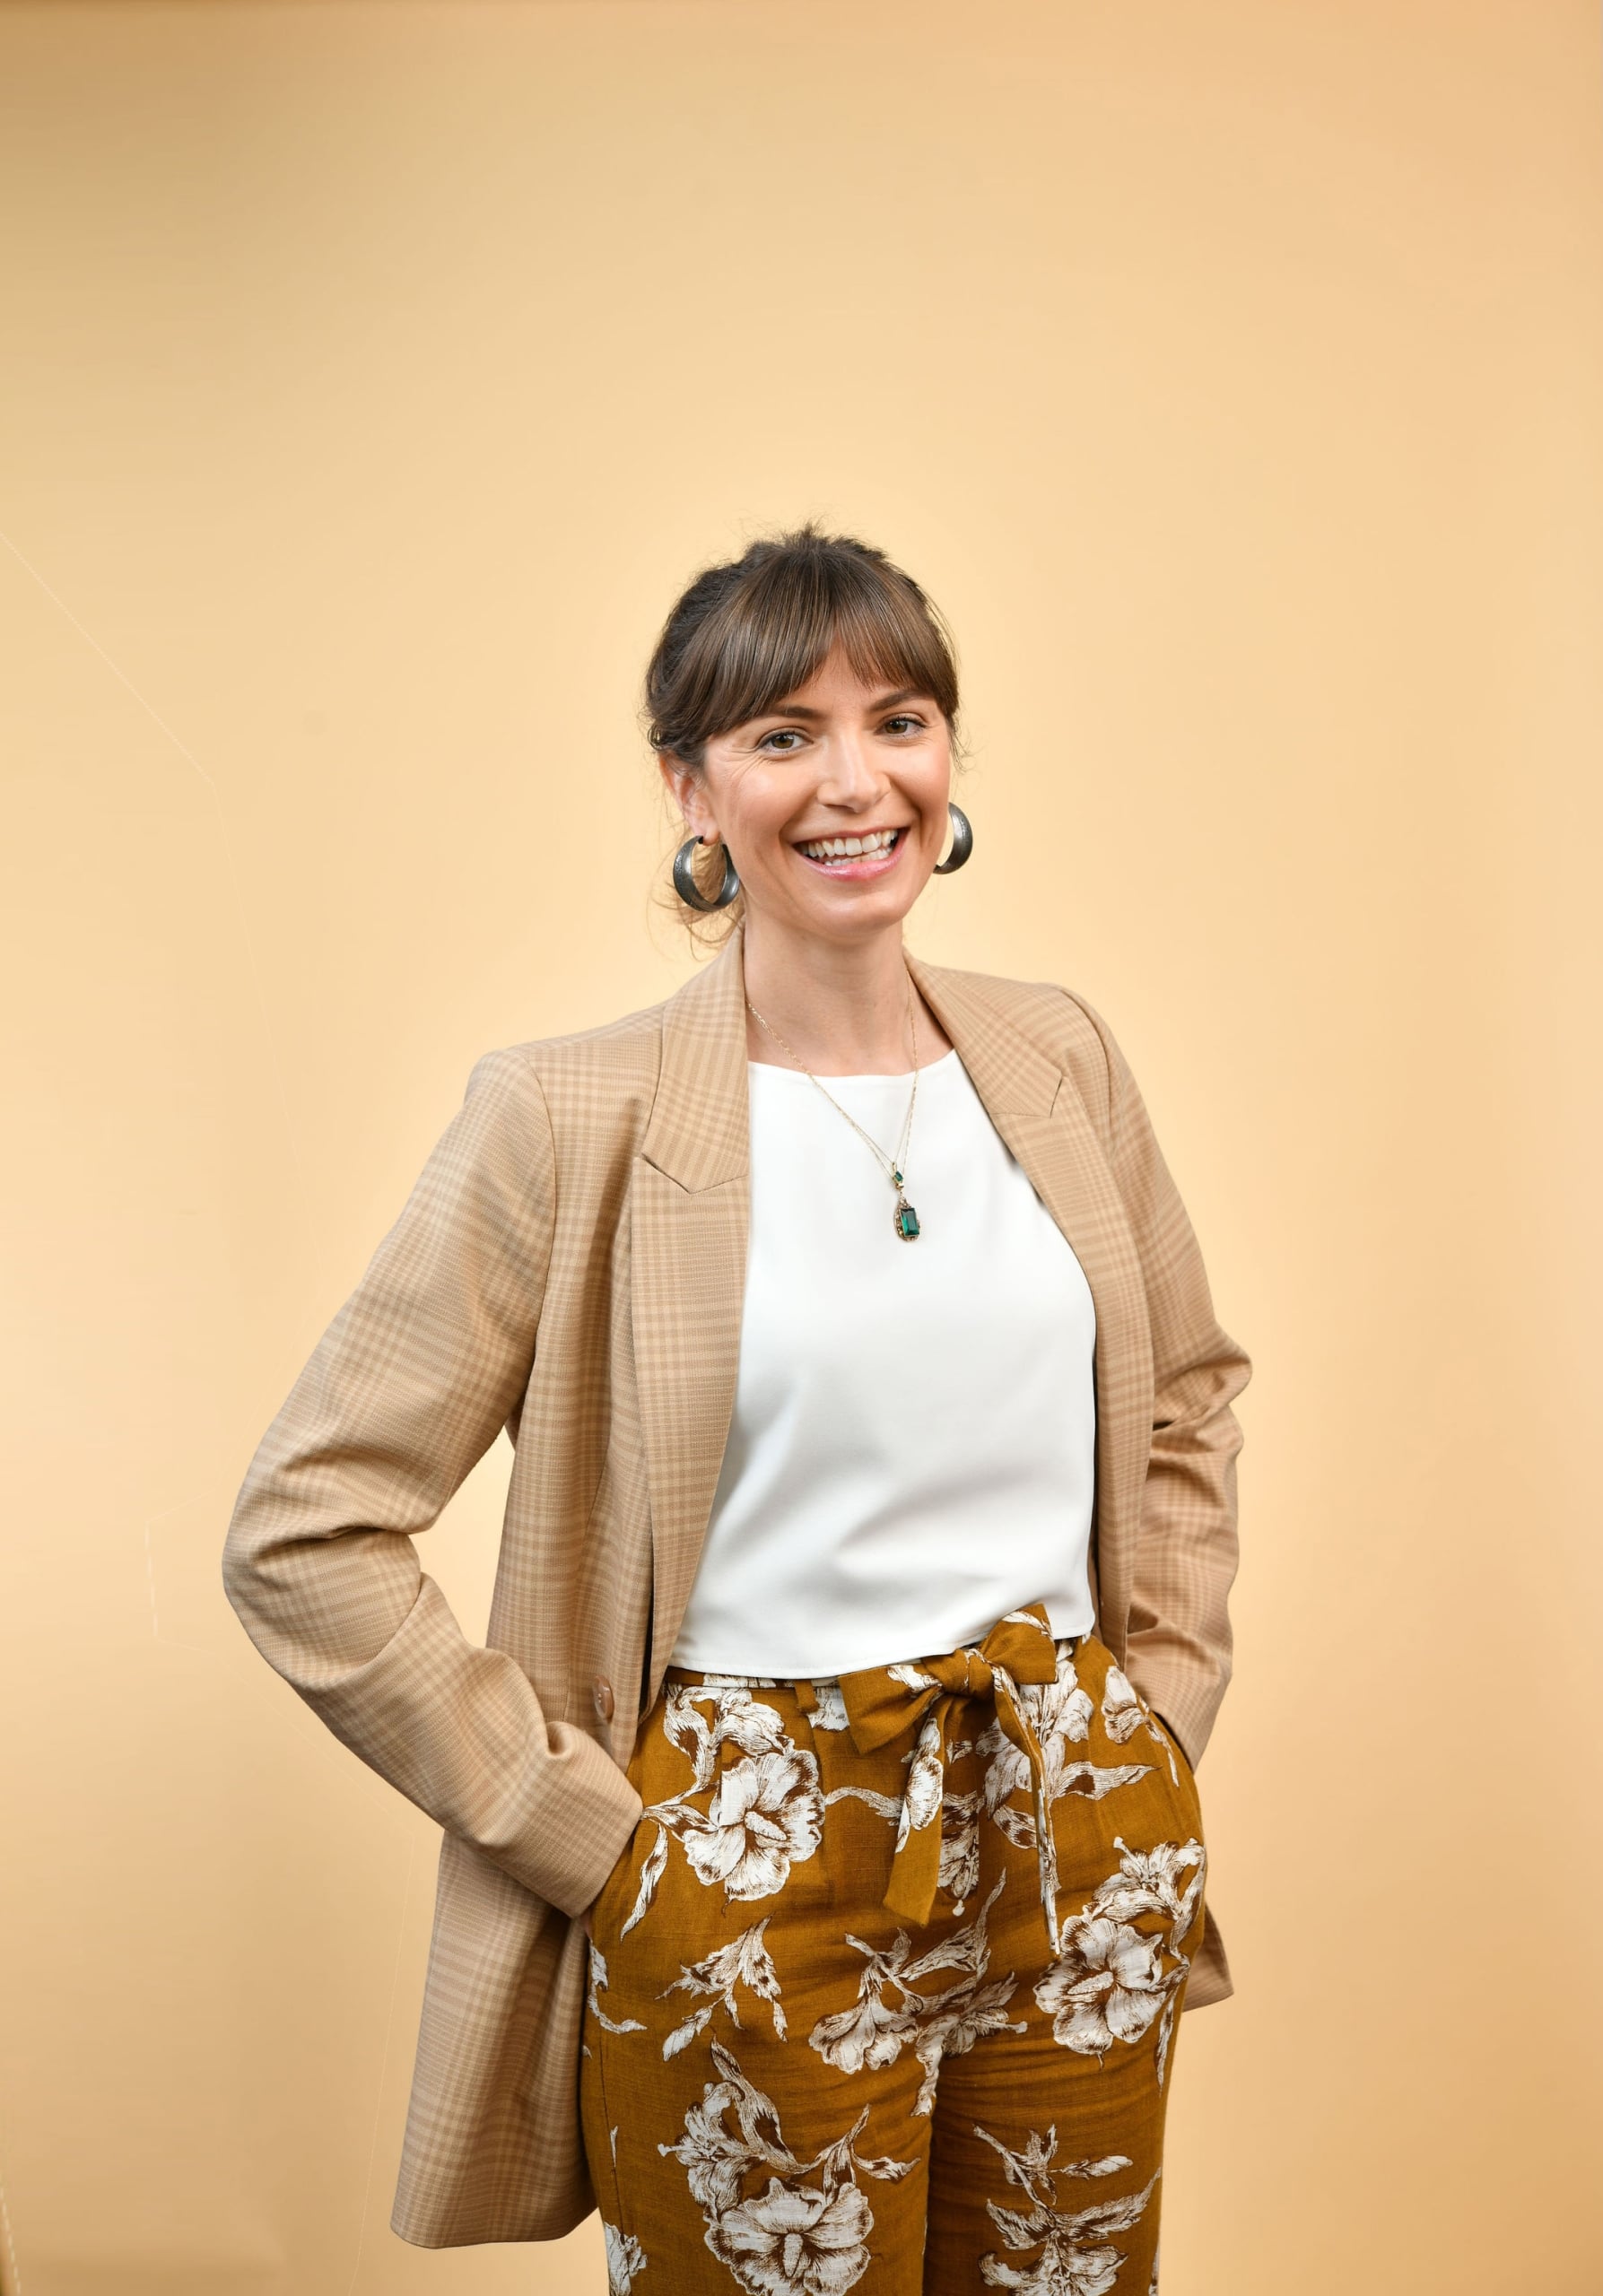 Portrait of DRANZCOG Dr Elysia Robb against a beige background